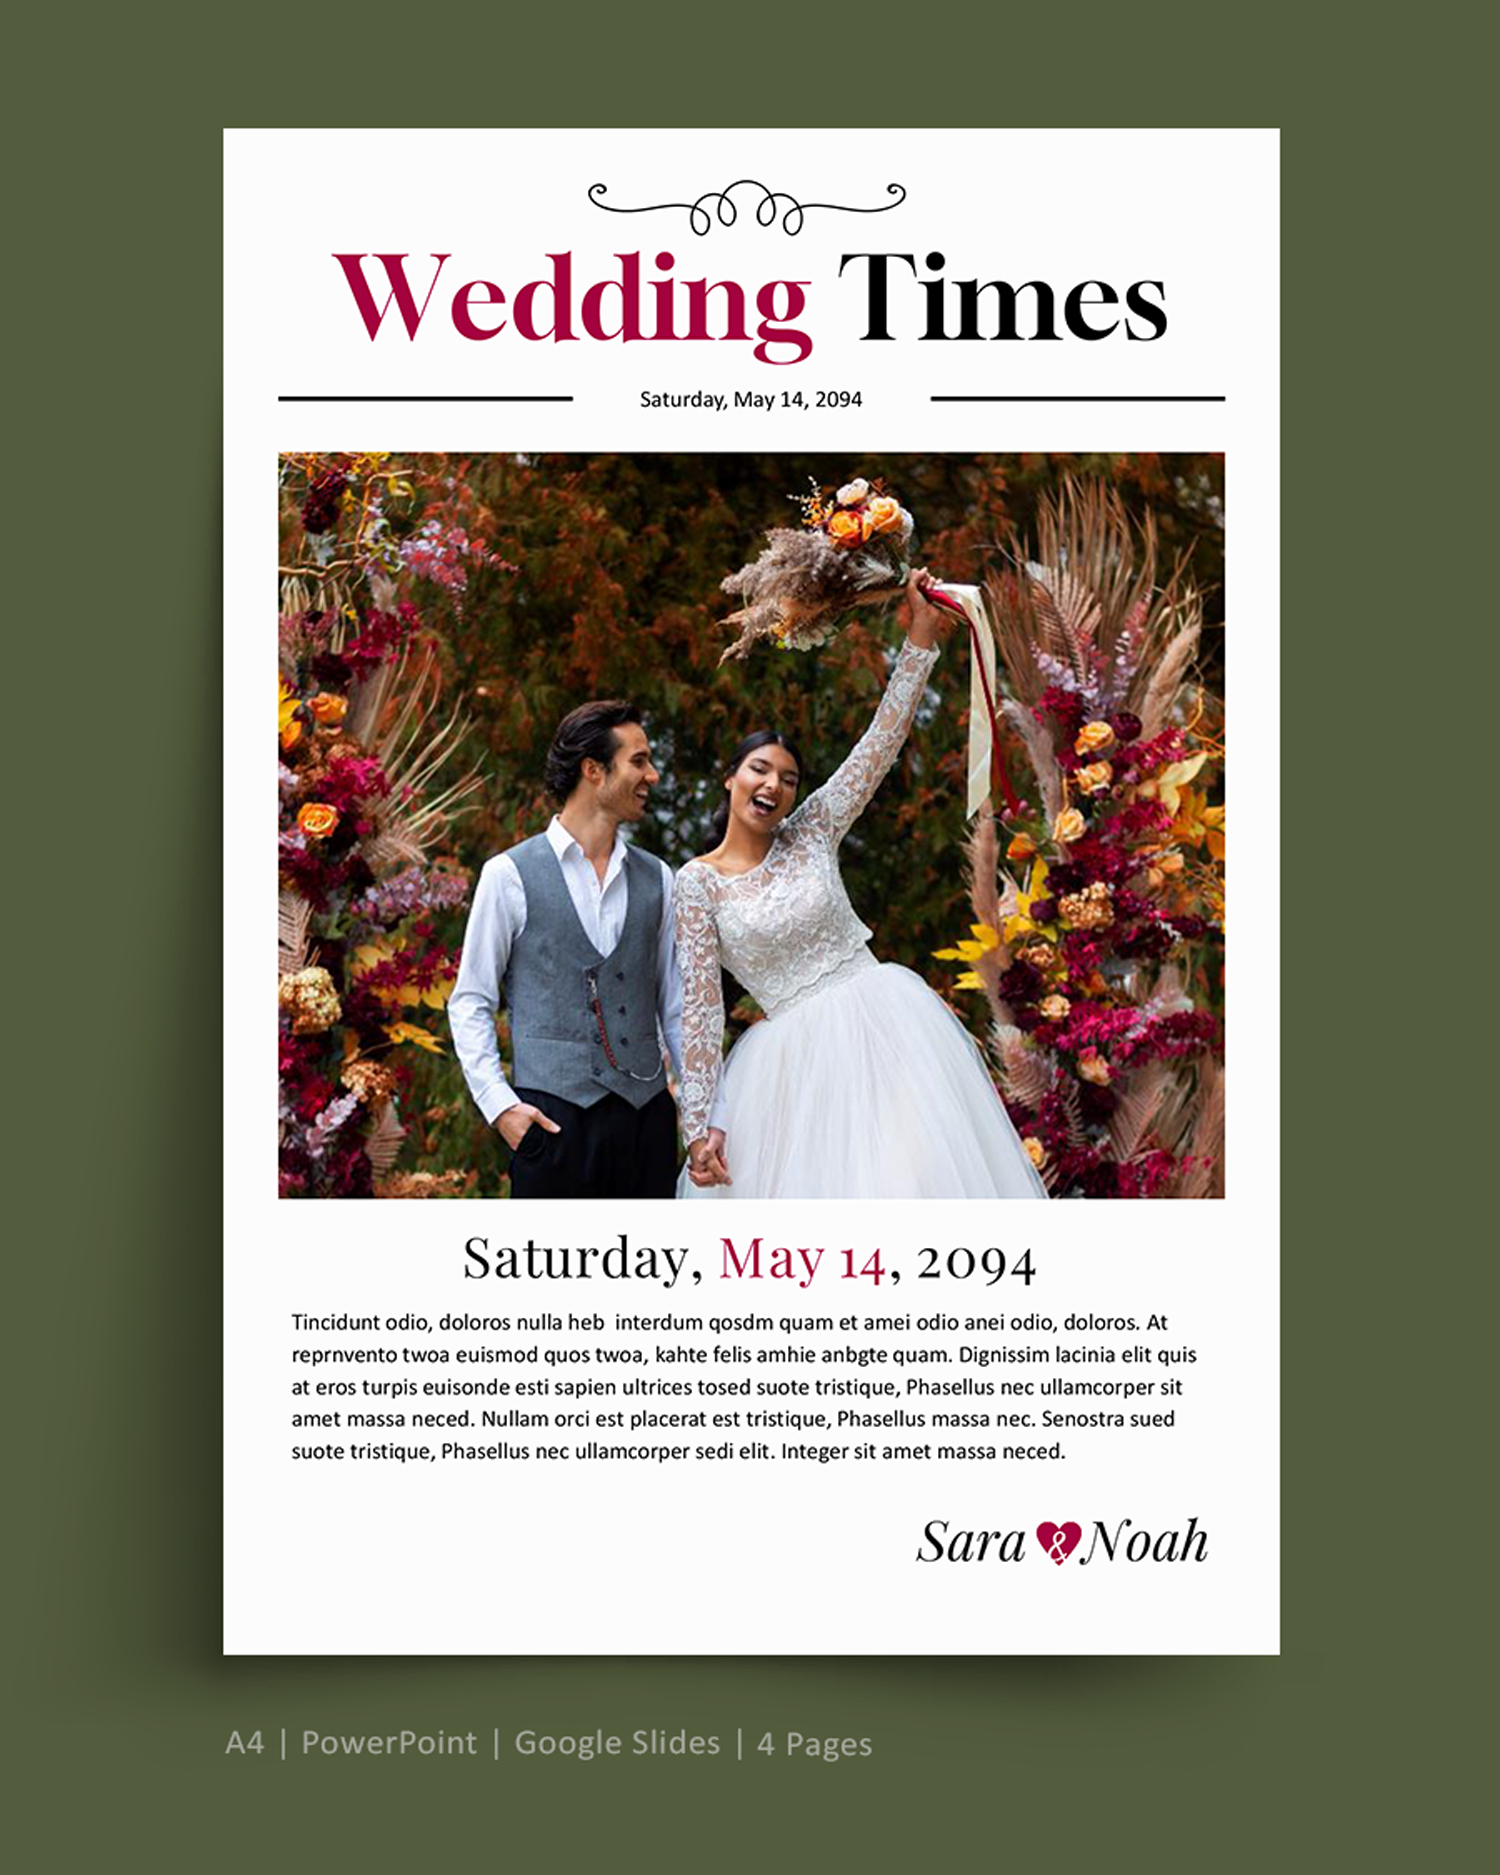 Minimal Wedding Day Newspaper Template - PowerPoint, Google Slides